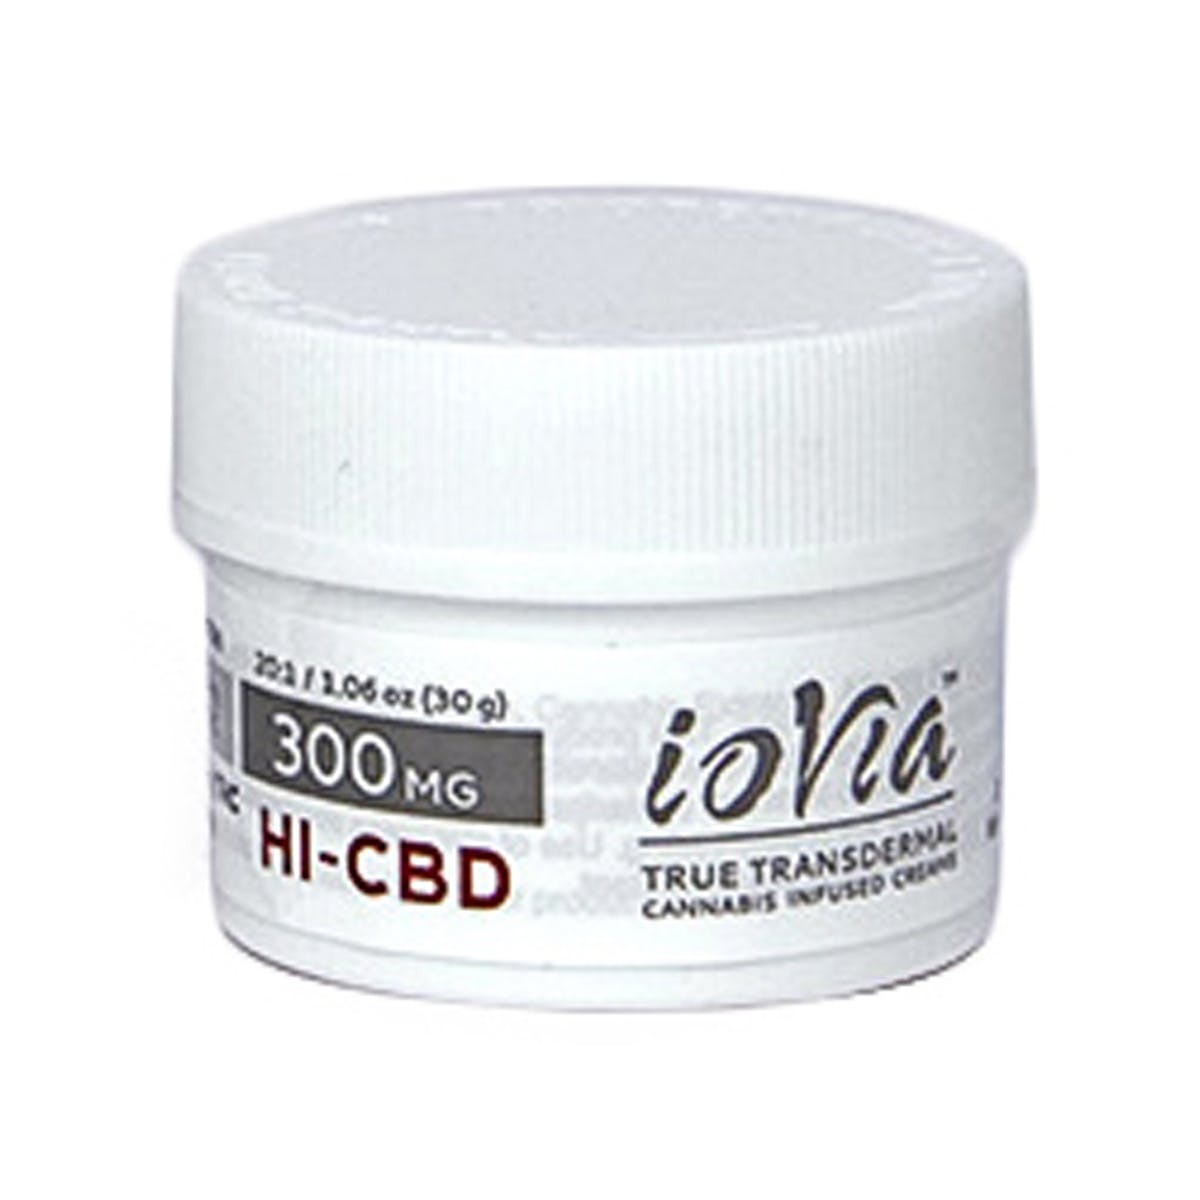 (Rec) ioVia Transdermal - 300mg HI-CBD